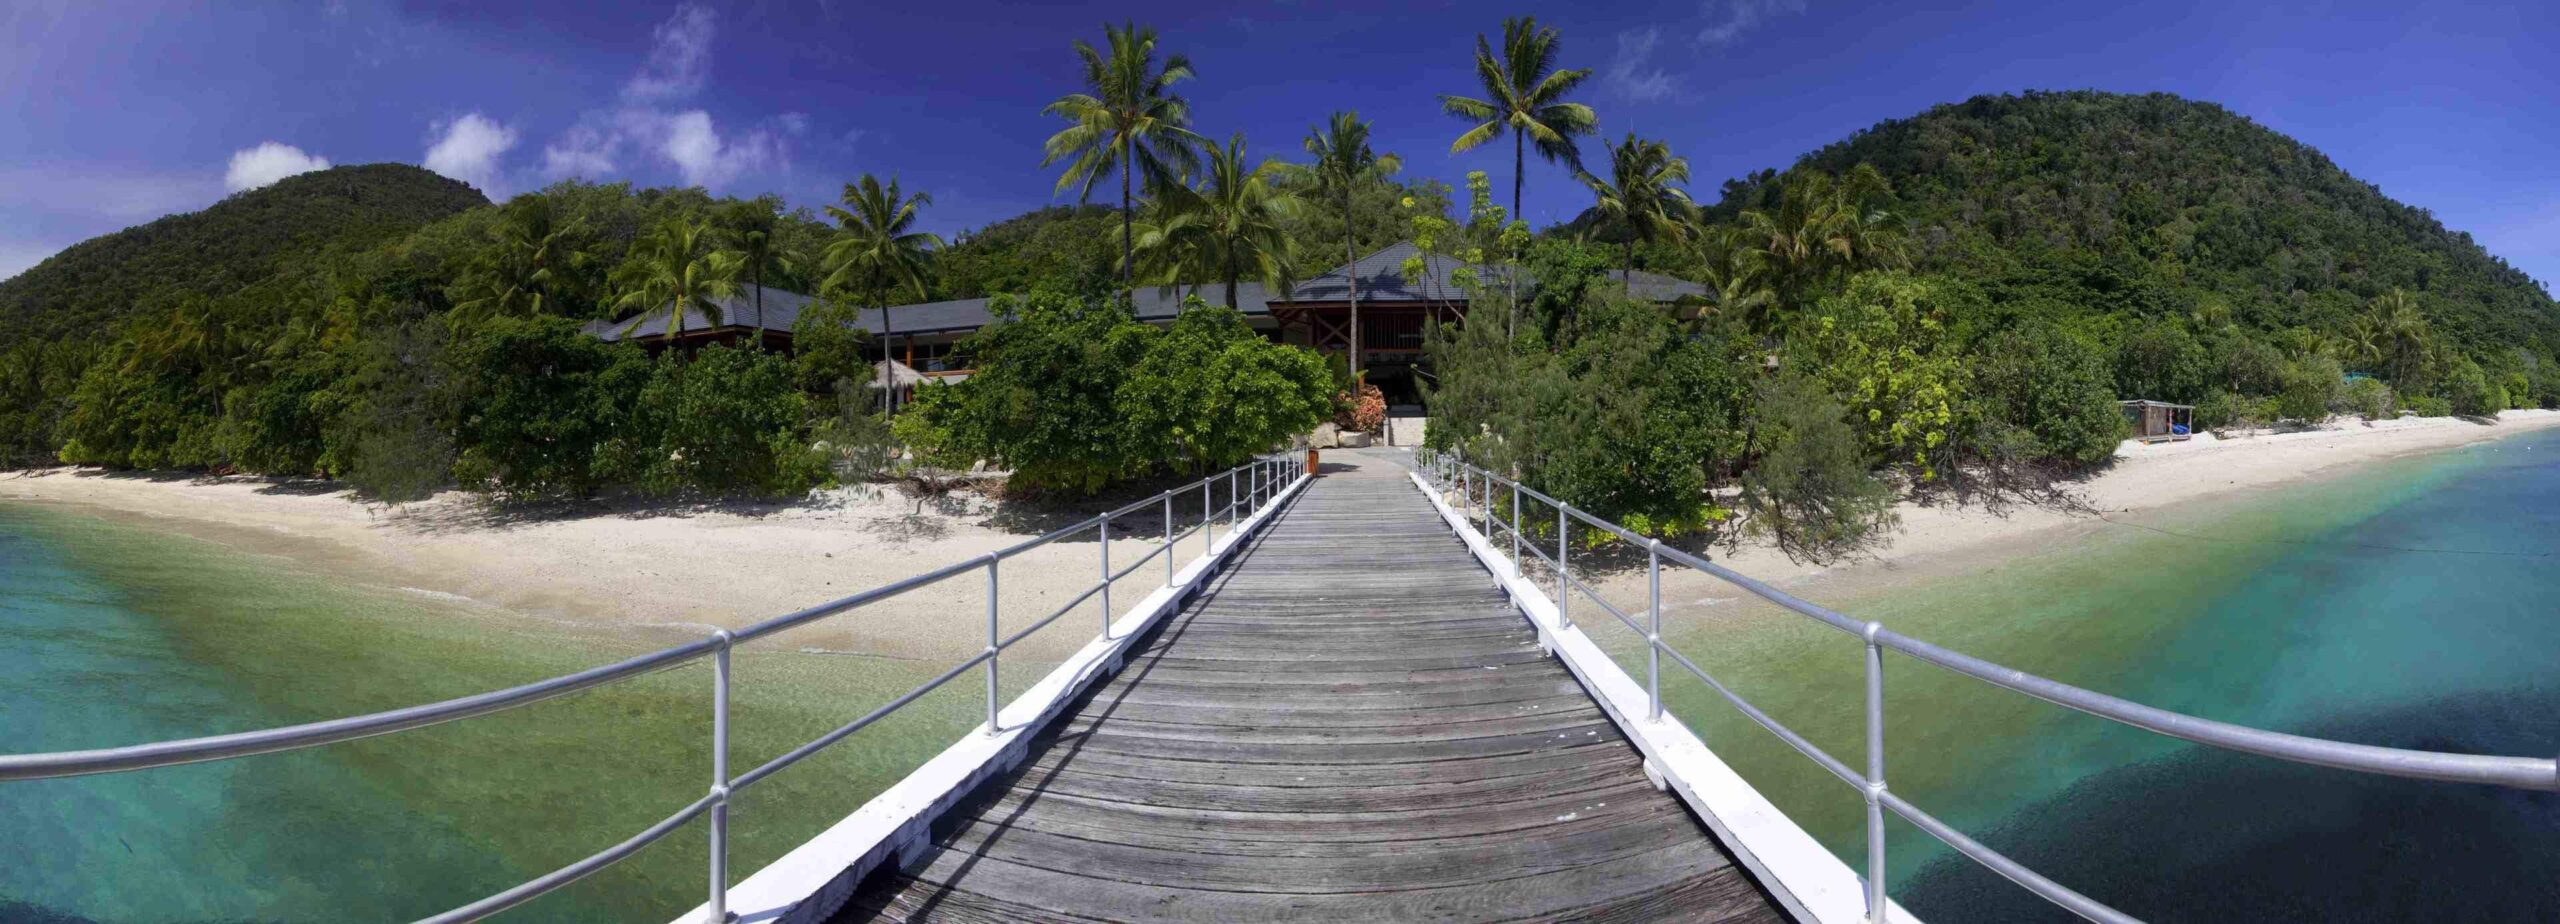 Fitzroy Island Resort